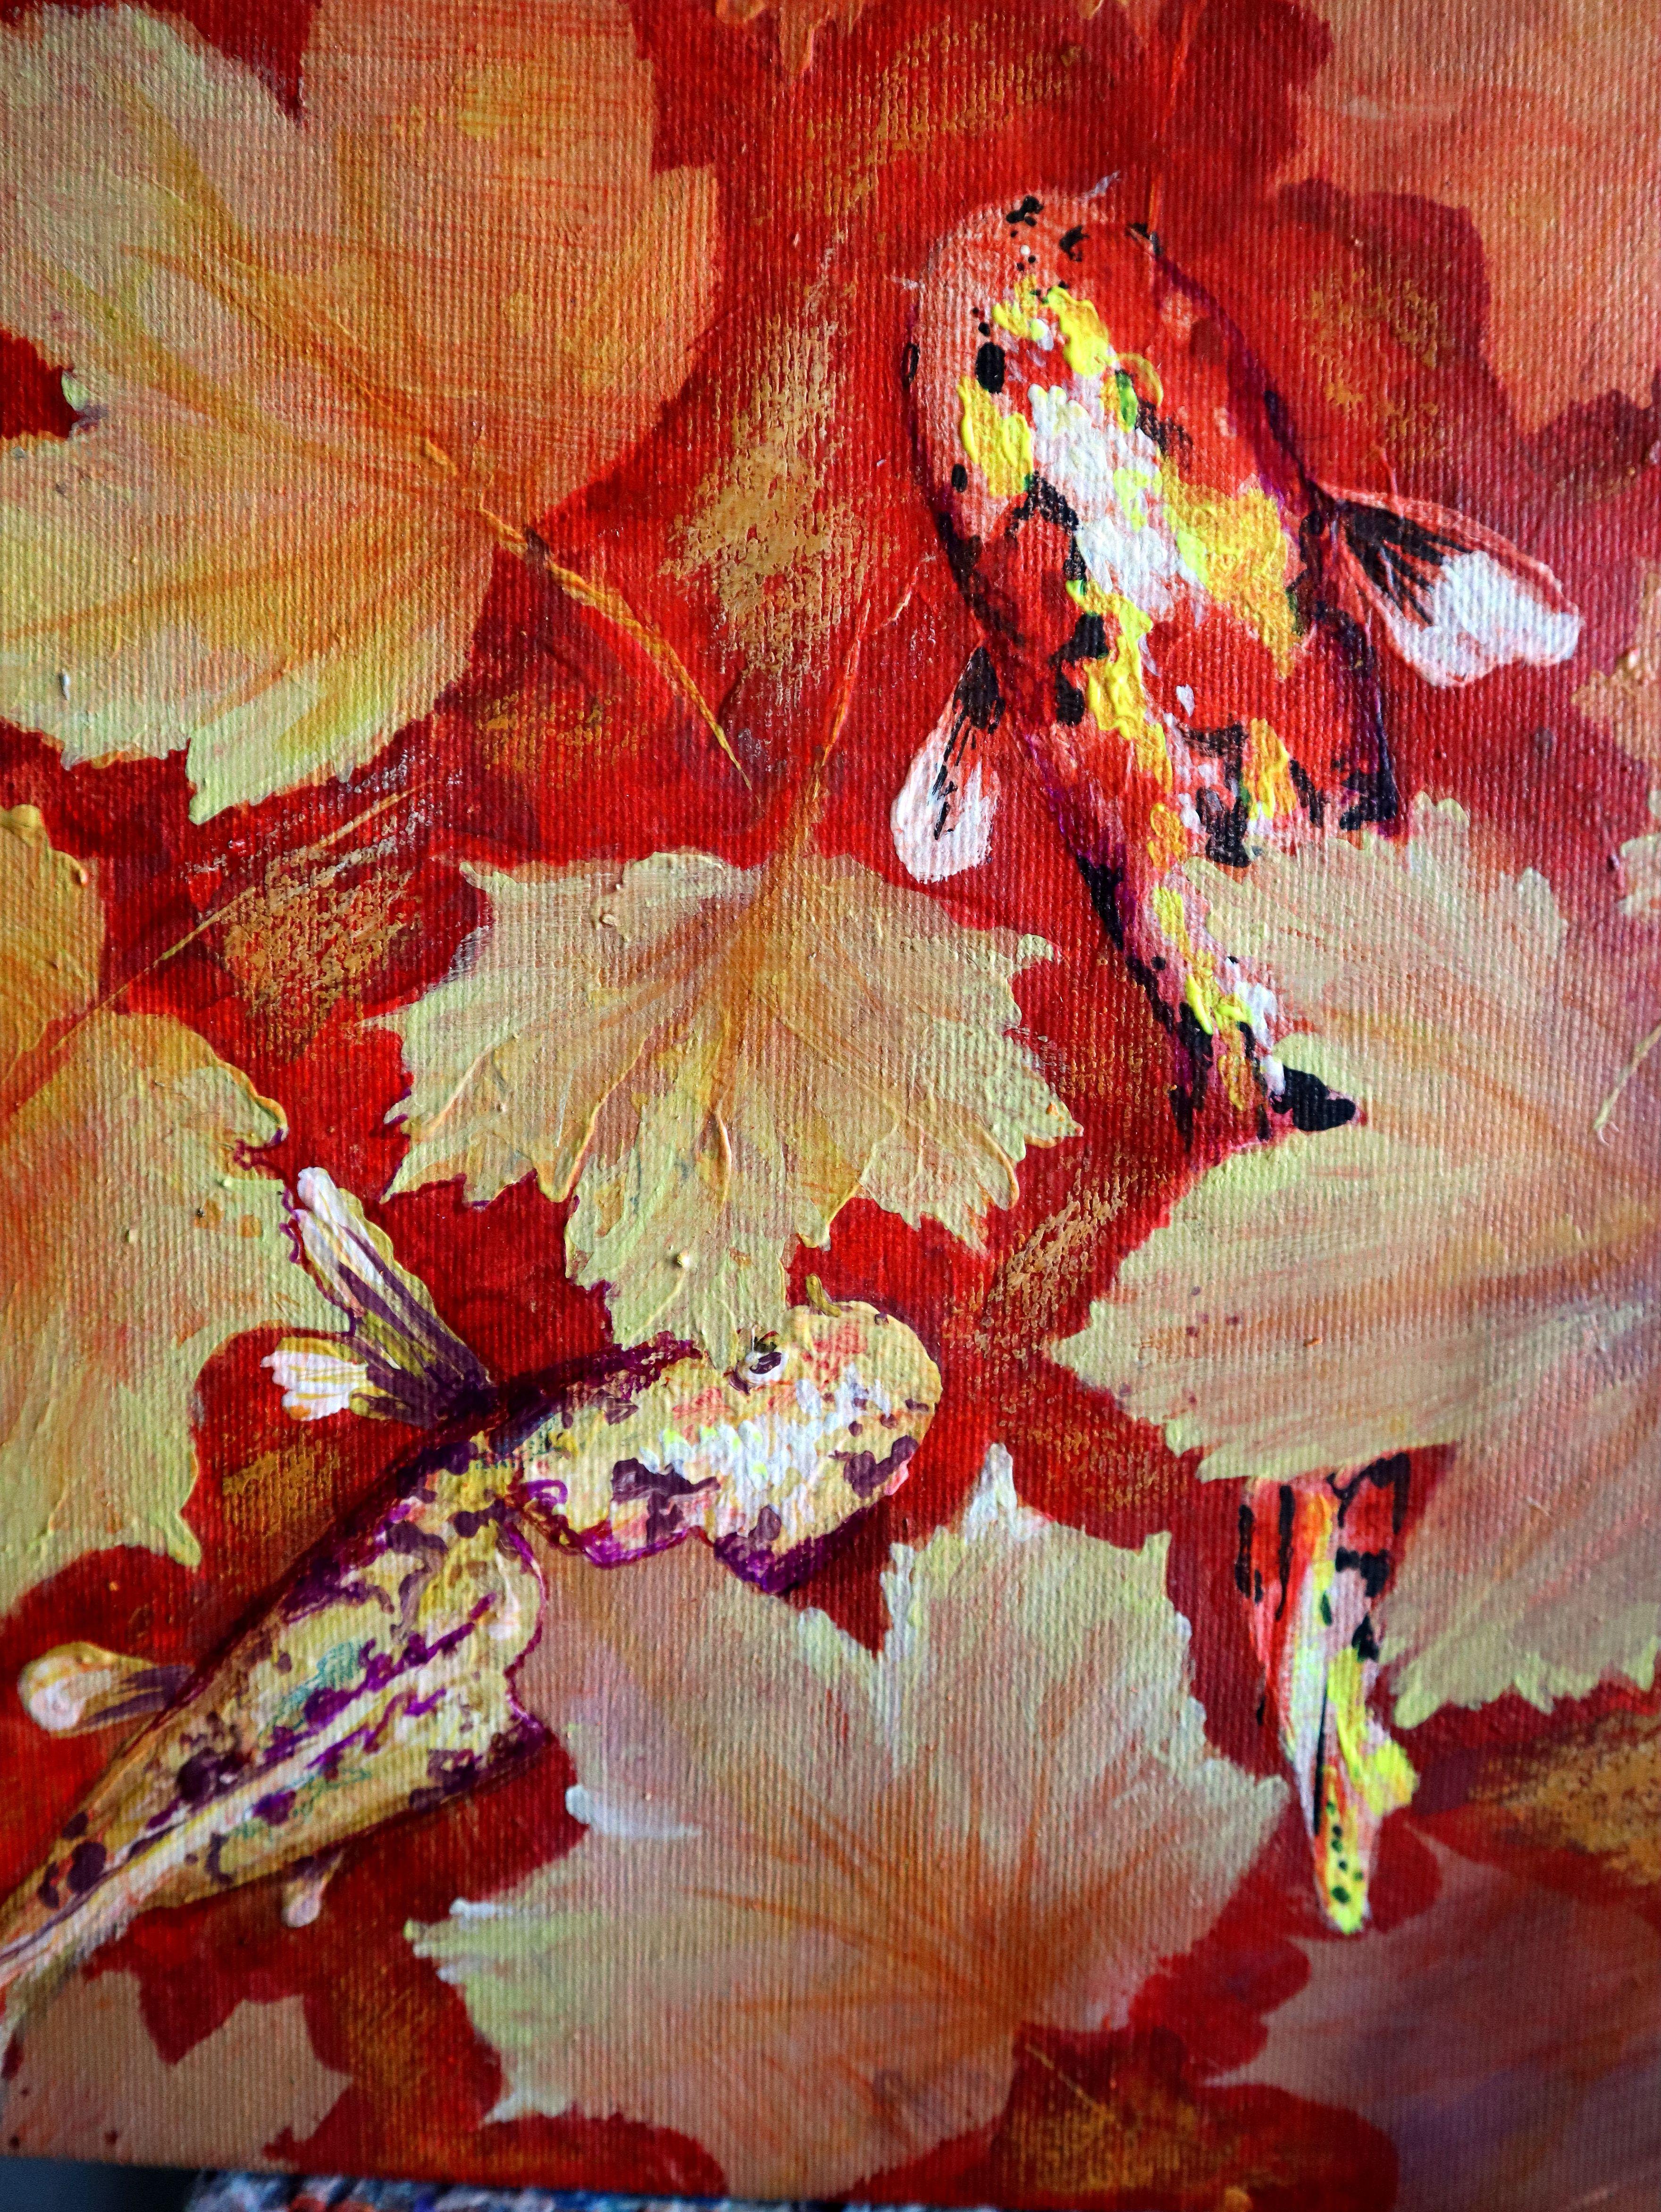 Yellow Leaves and Colored Koi Fish in Red Bottom Pool - Painting by RAKHMET REDZHEPOV (RAMZI)